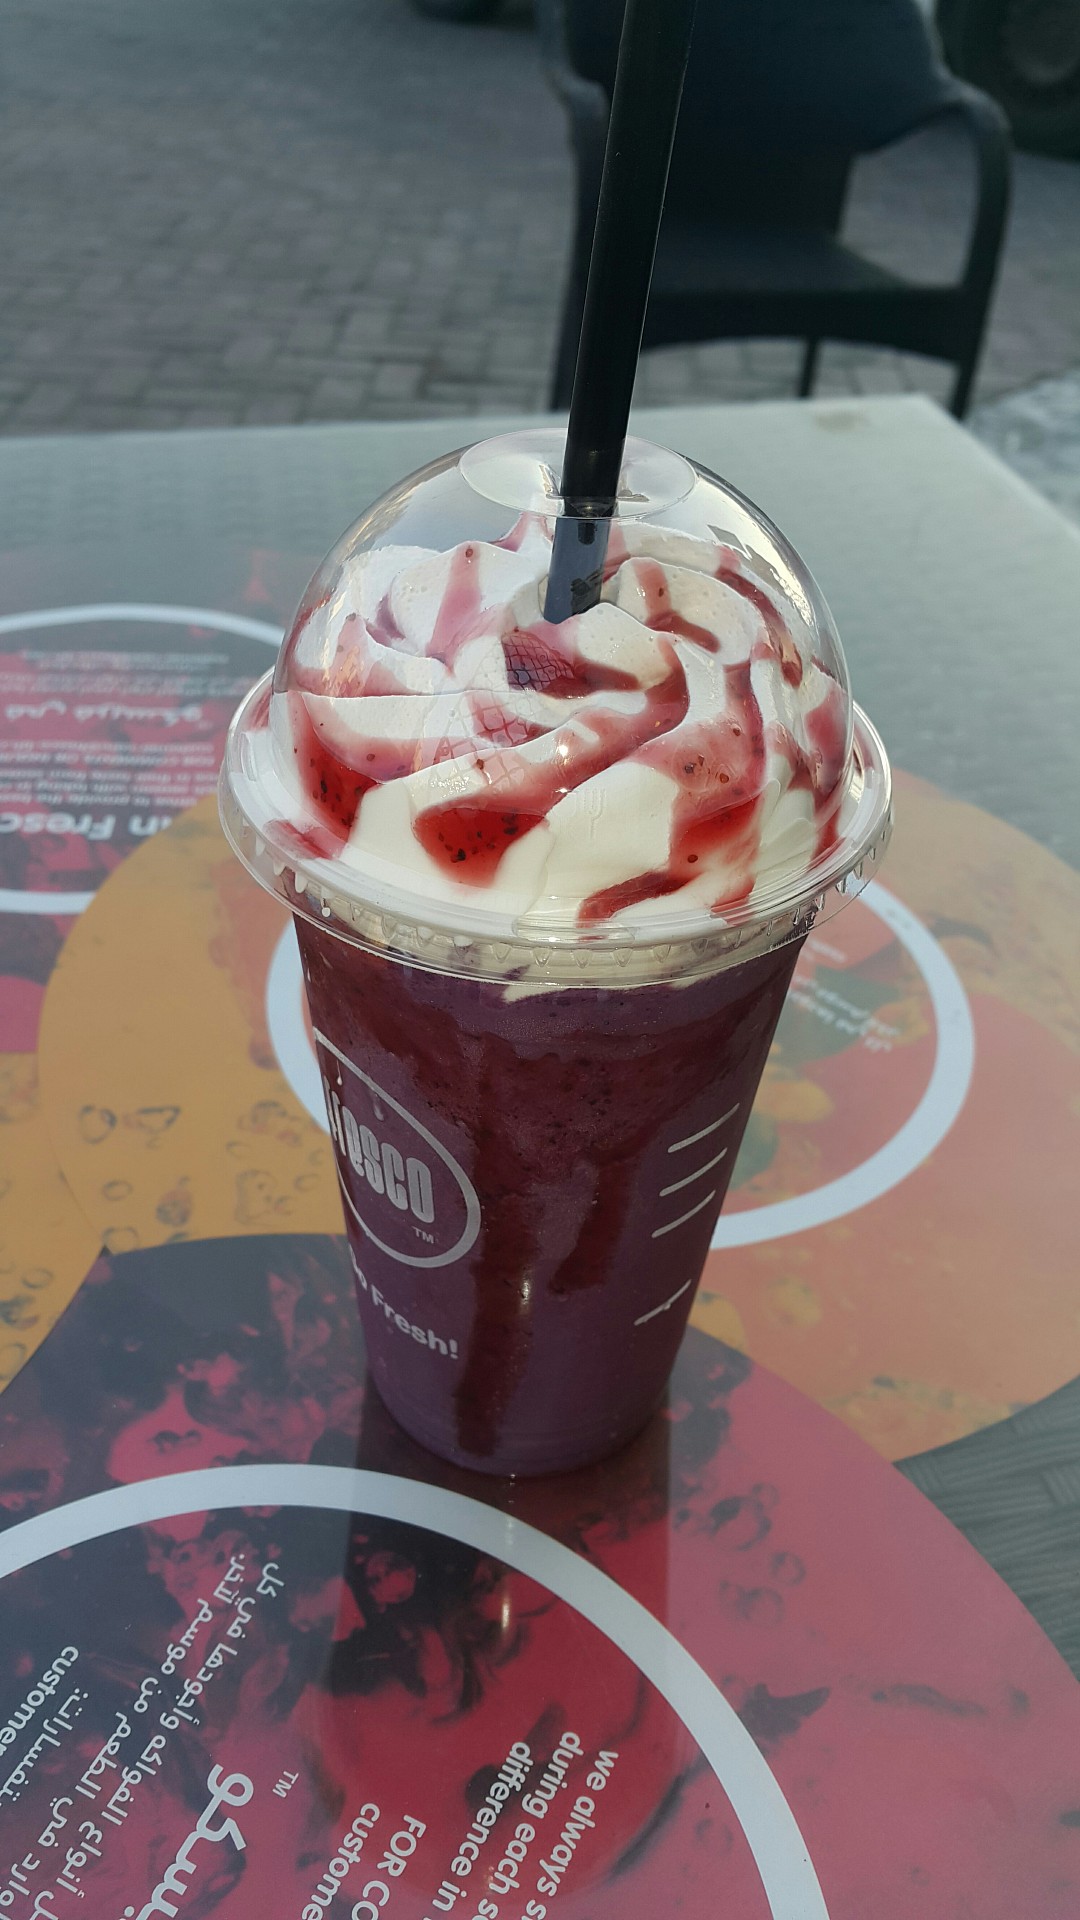 My favourite smoothie from Fresco 😍😍😍 (blueberry milkshake) 👅👅 @ فرسكو للعصائر و القهوة - البحرين